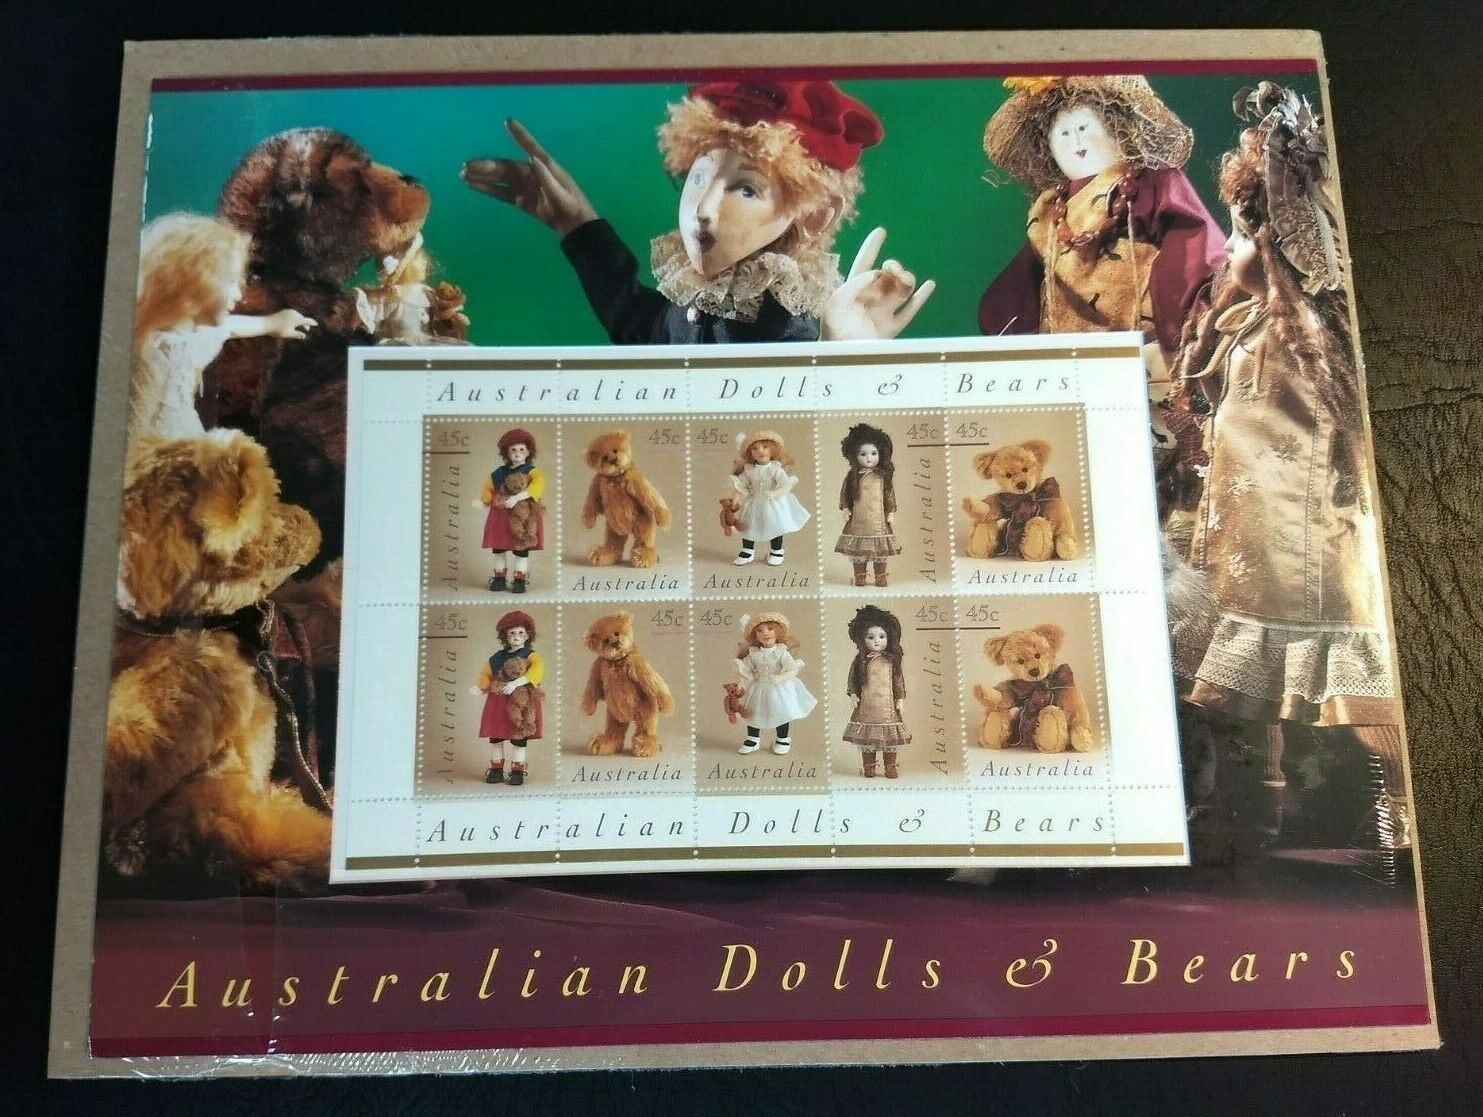 Australian Dolls & Bears Ms Presentation Sheet Australia 45¢ Mnh Sealed